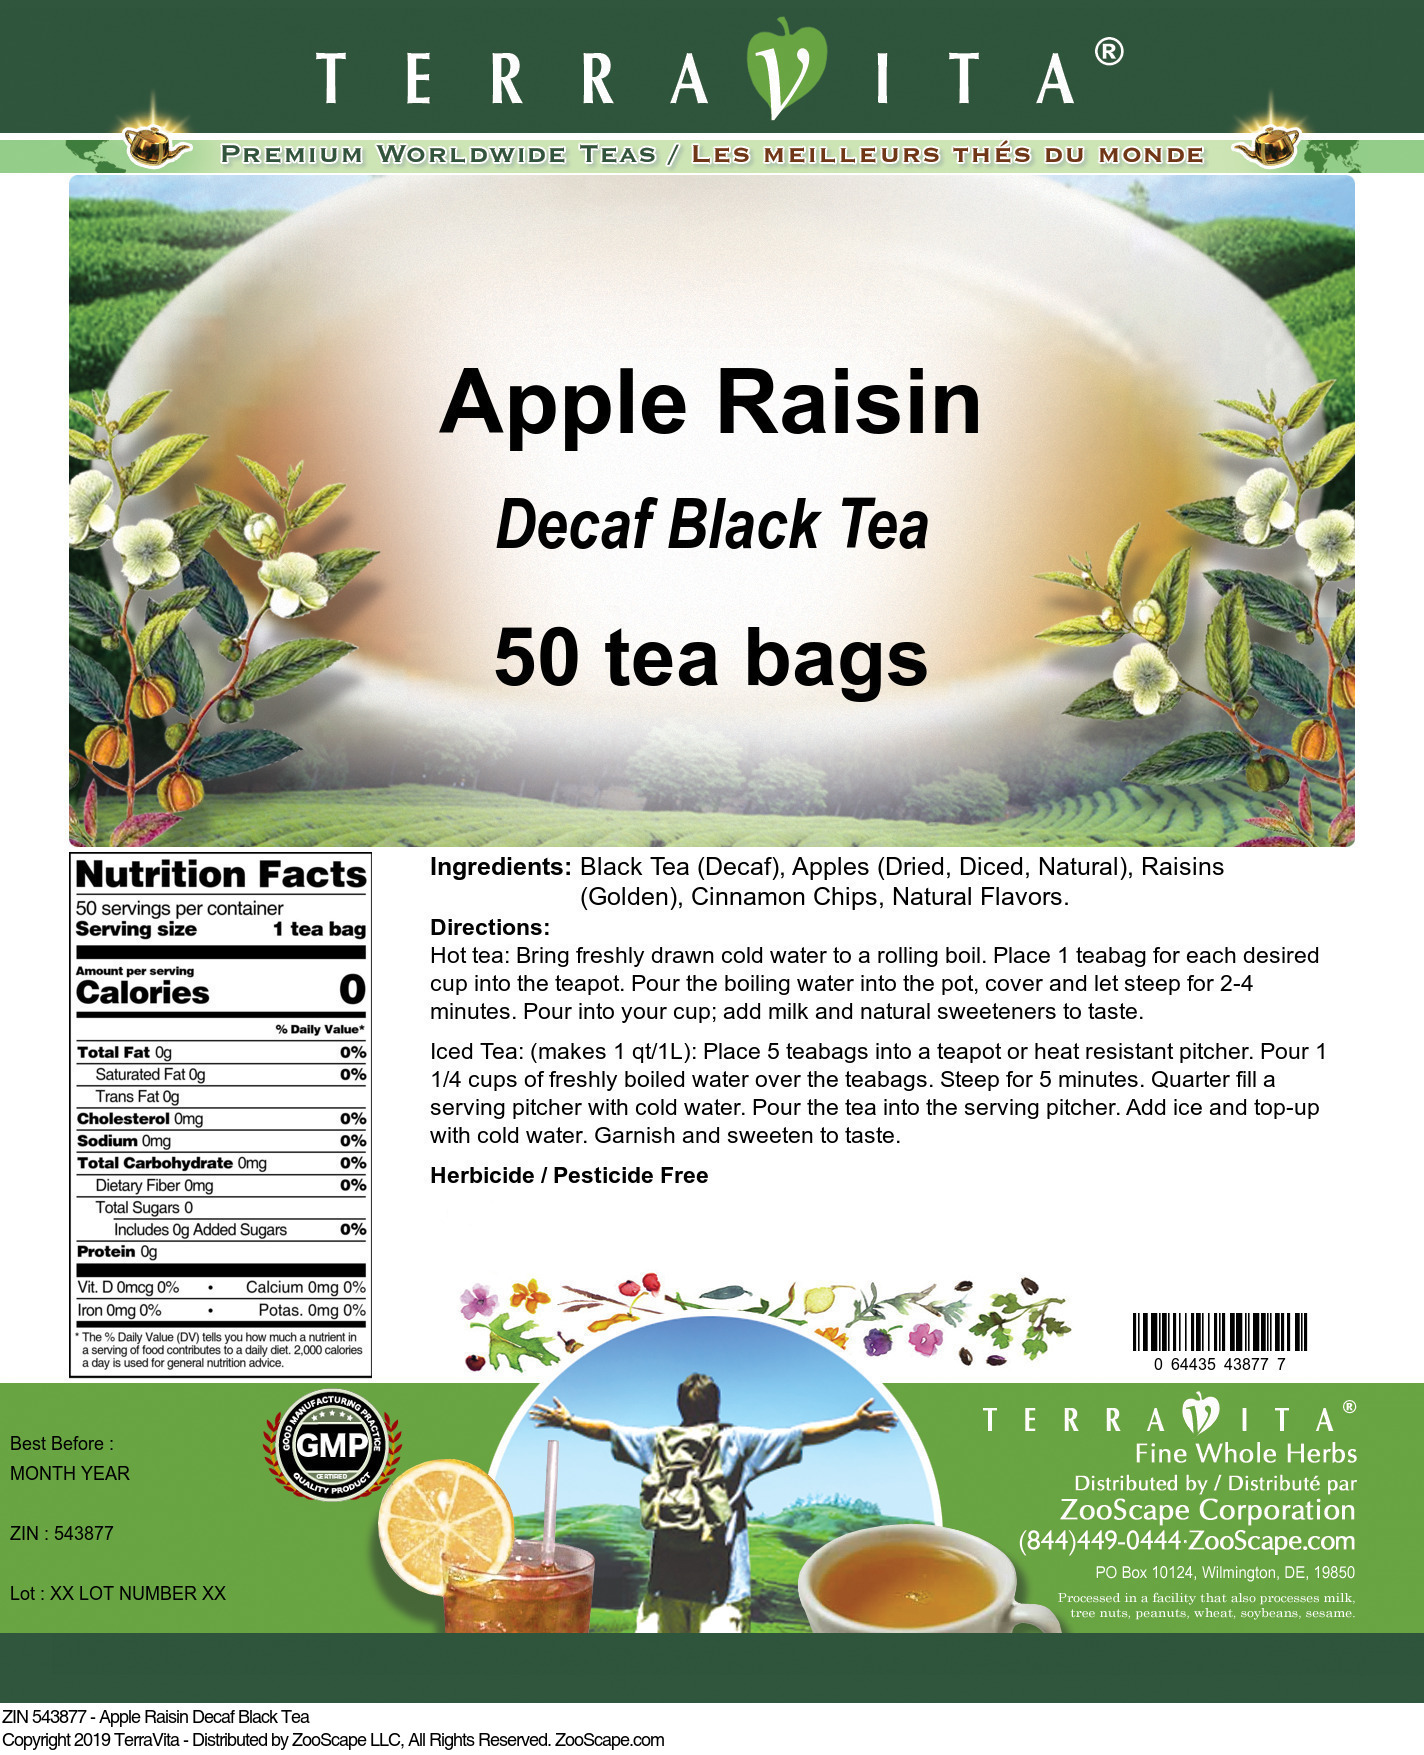 Apple Raisin Decaf Black Tea - Label